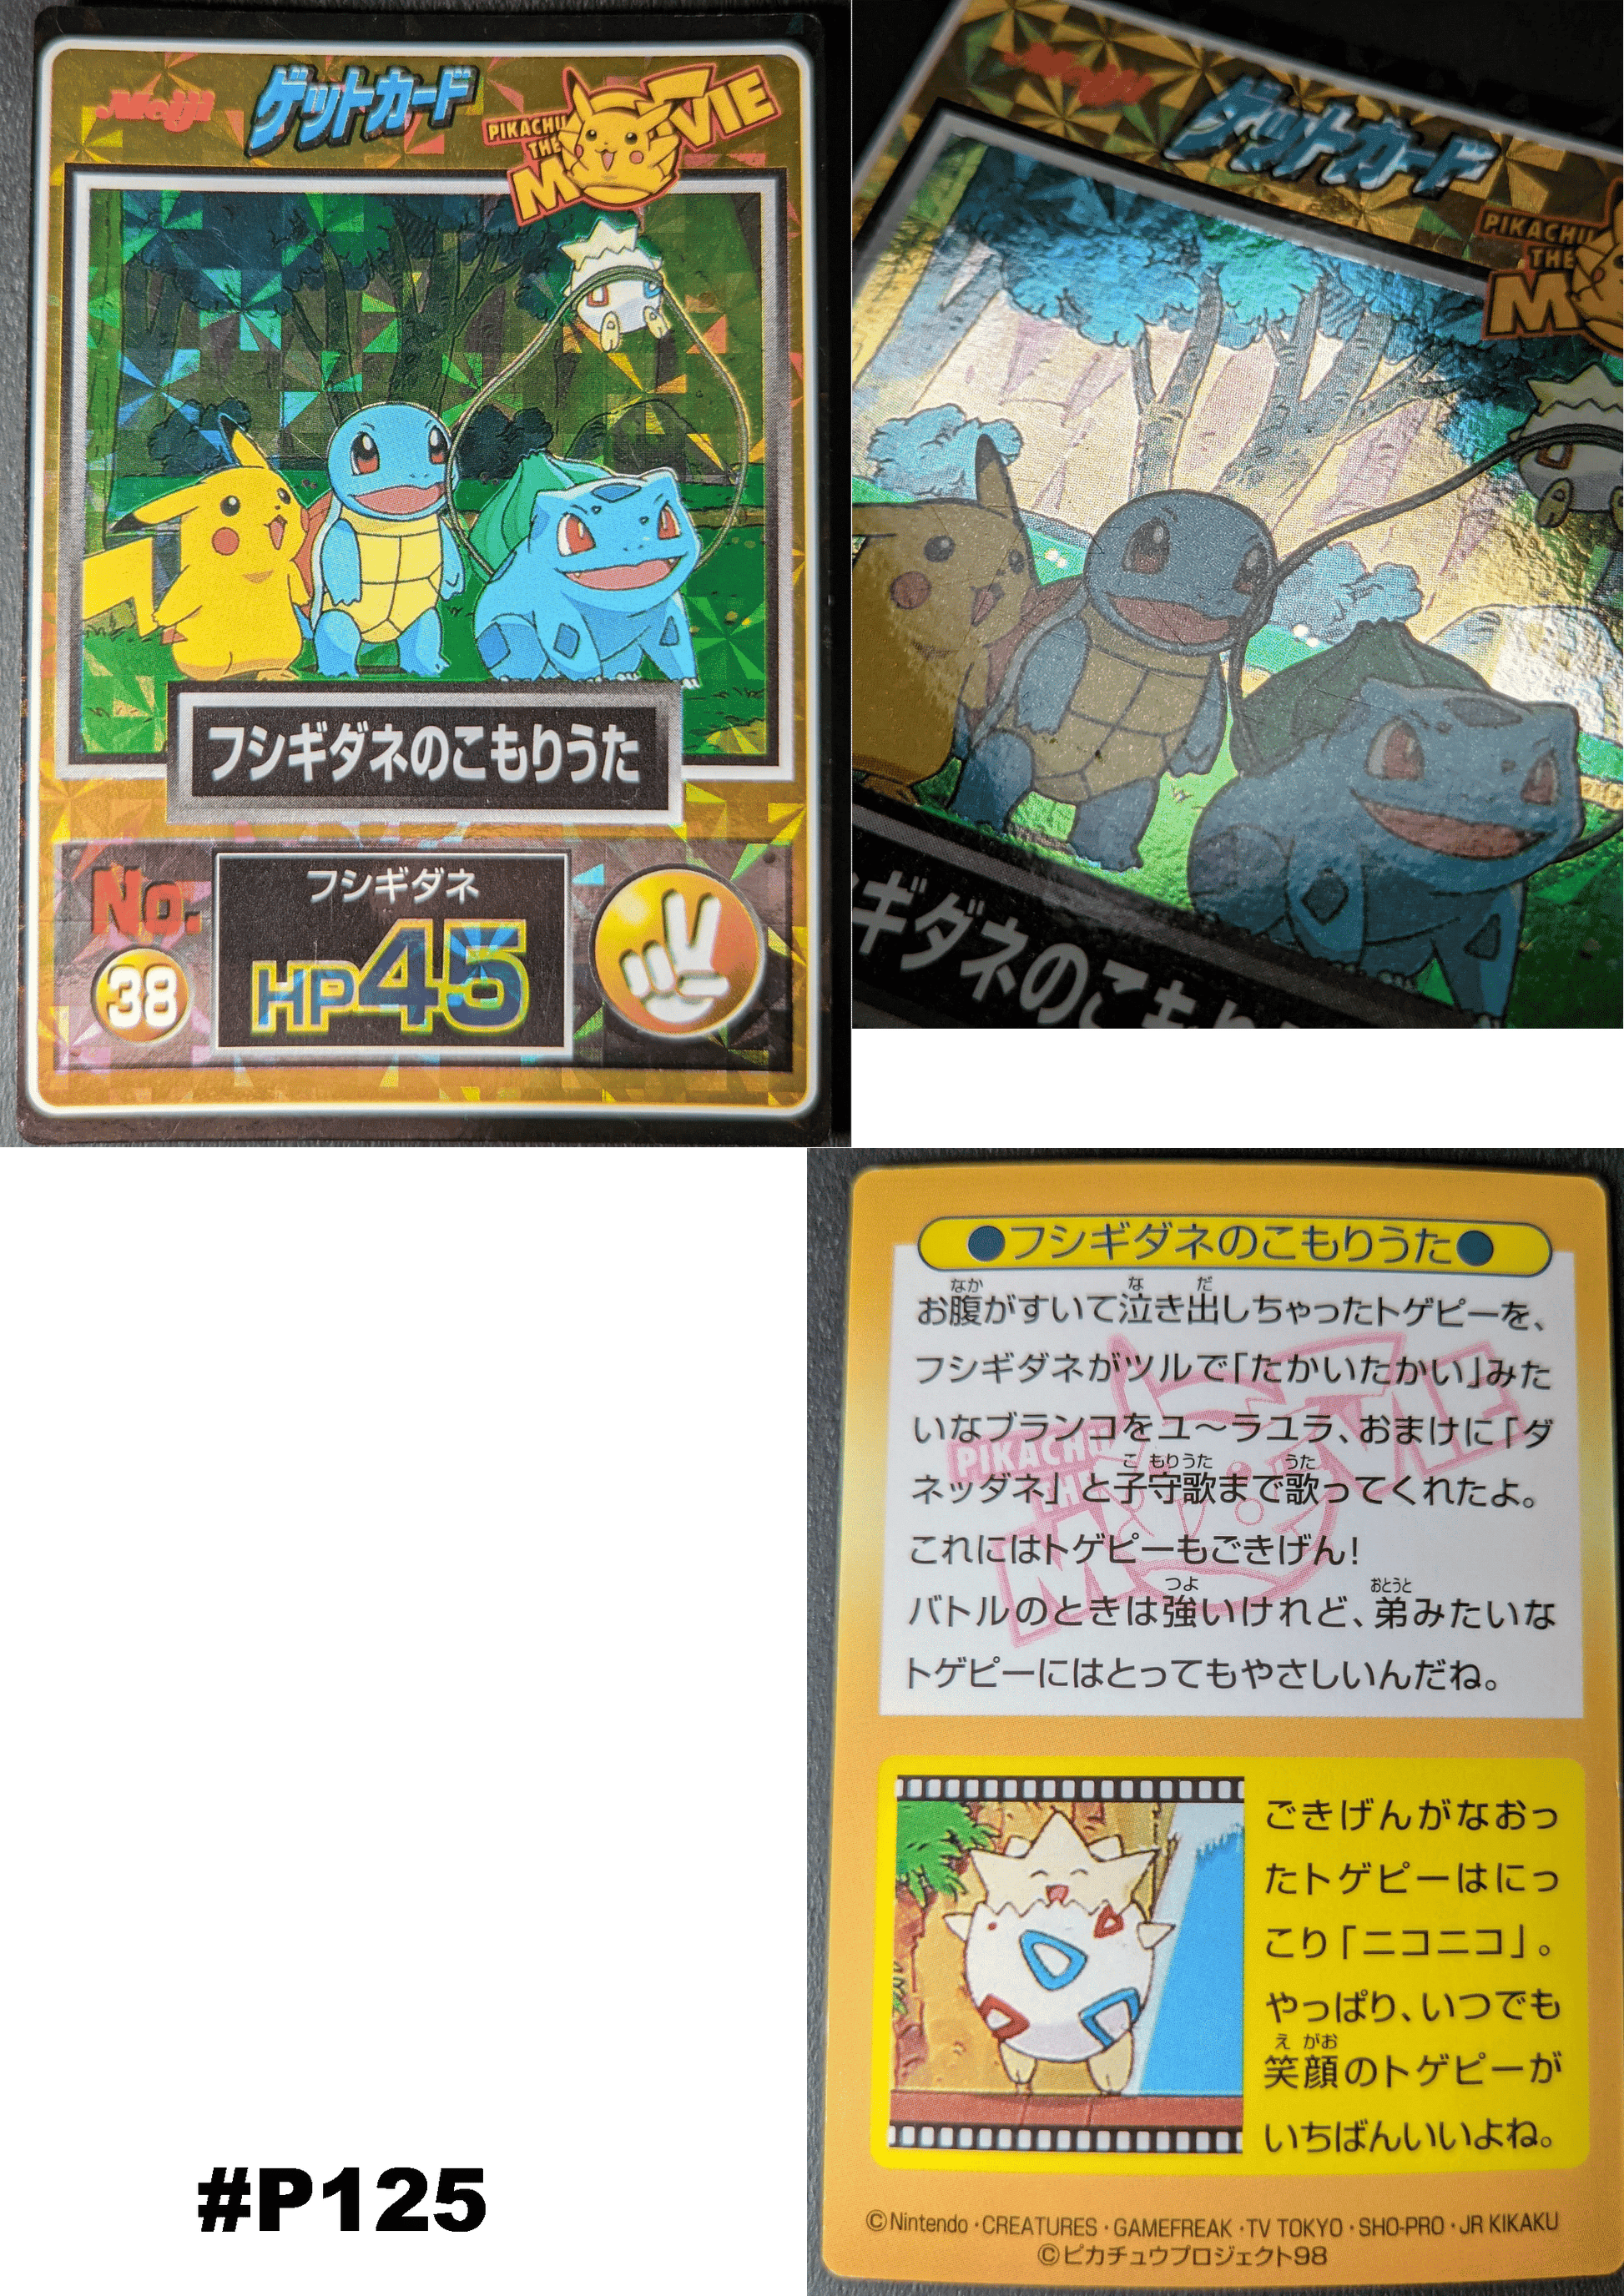 Meiji Get card No.38 | Pikachu the movie ChitoroShop